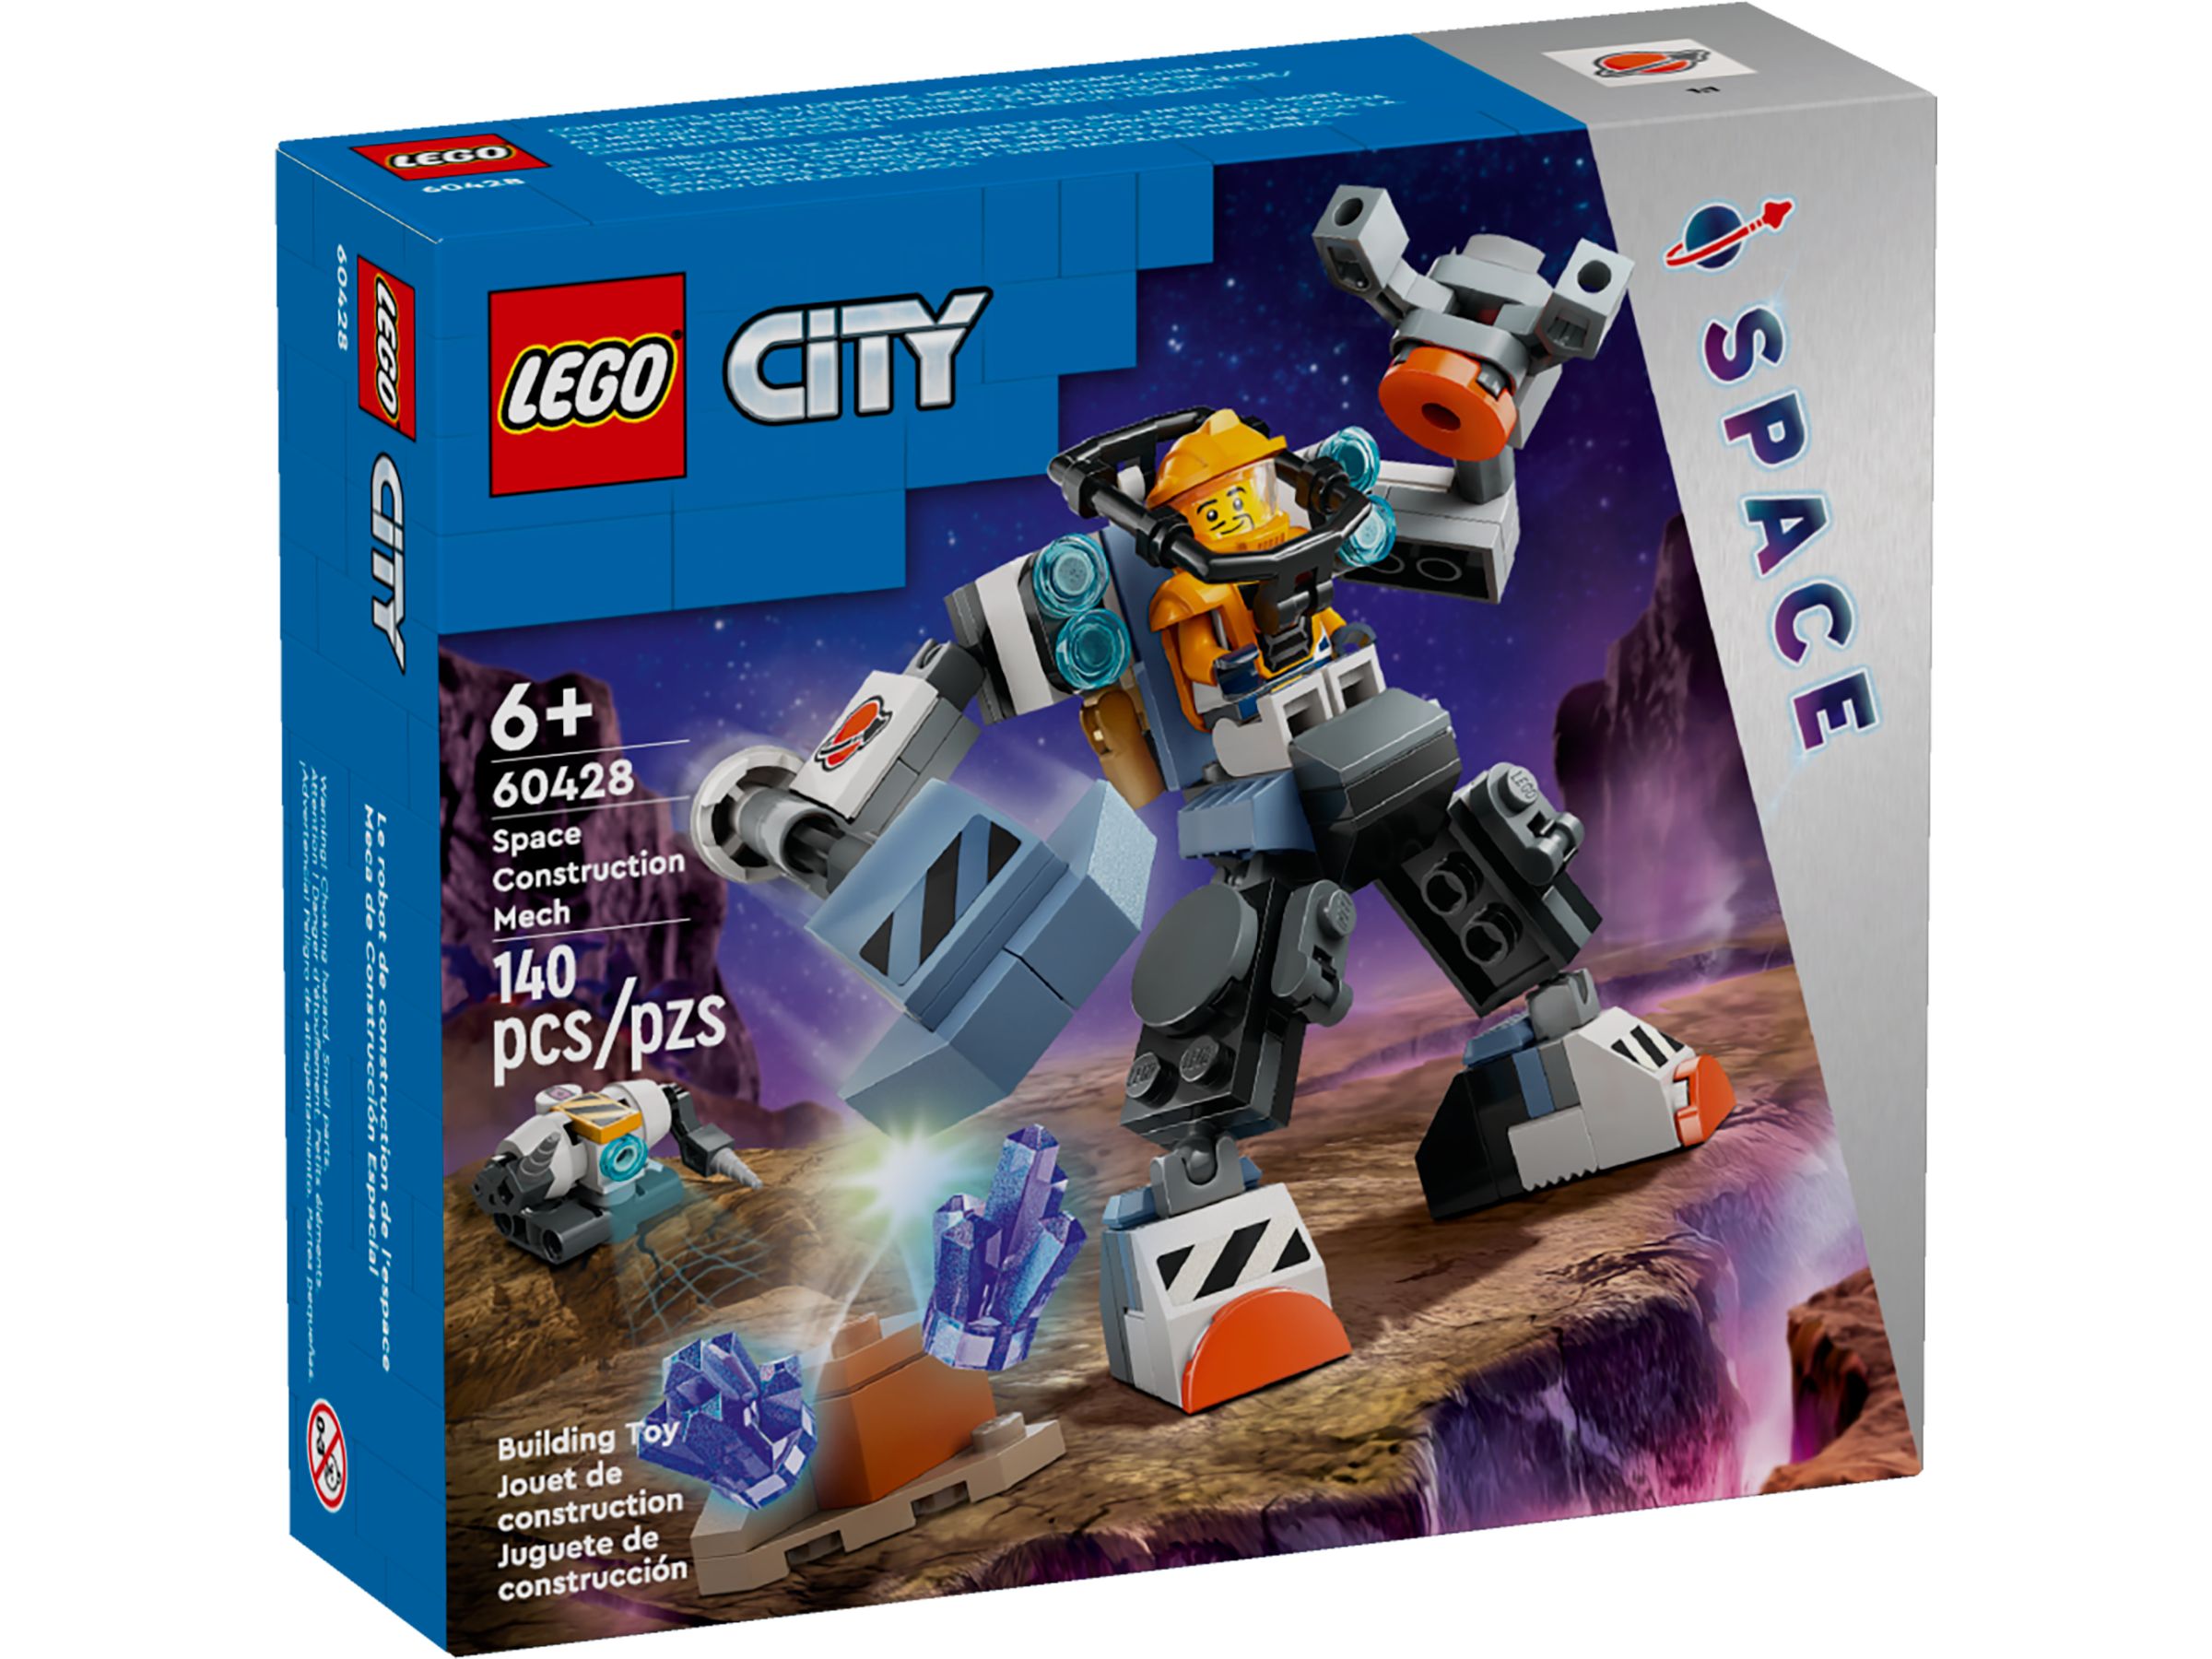 LEGO City 60428 Weltraum-Mech LEGO_60428_Box1_v39.jpg